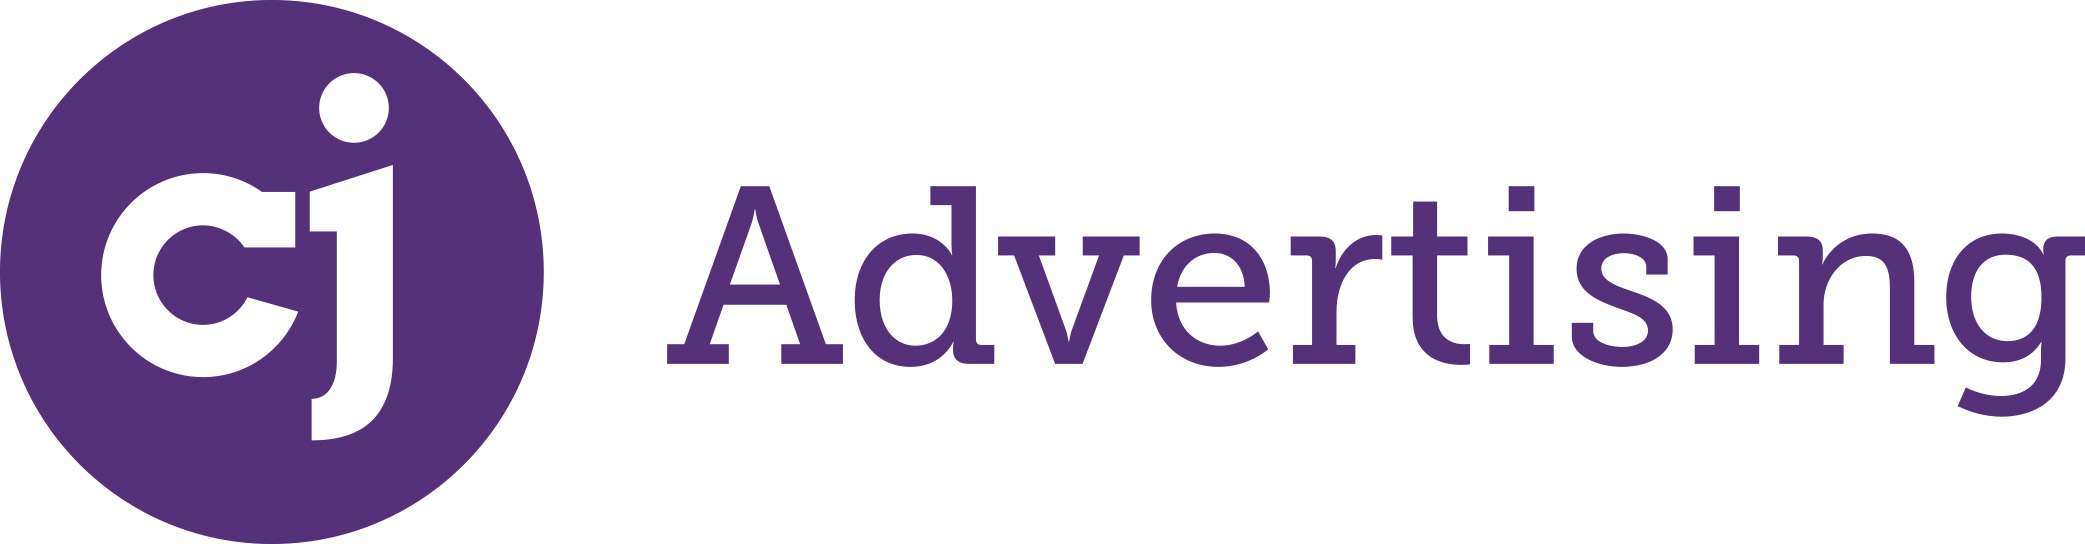 cj Advertising logo